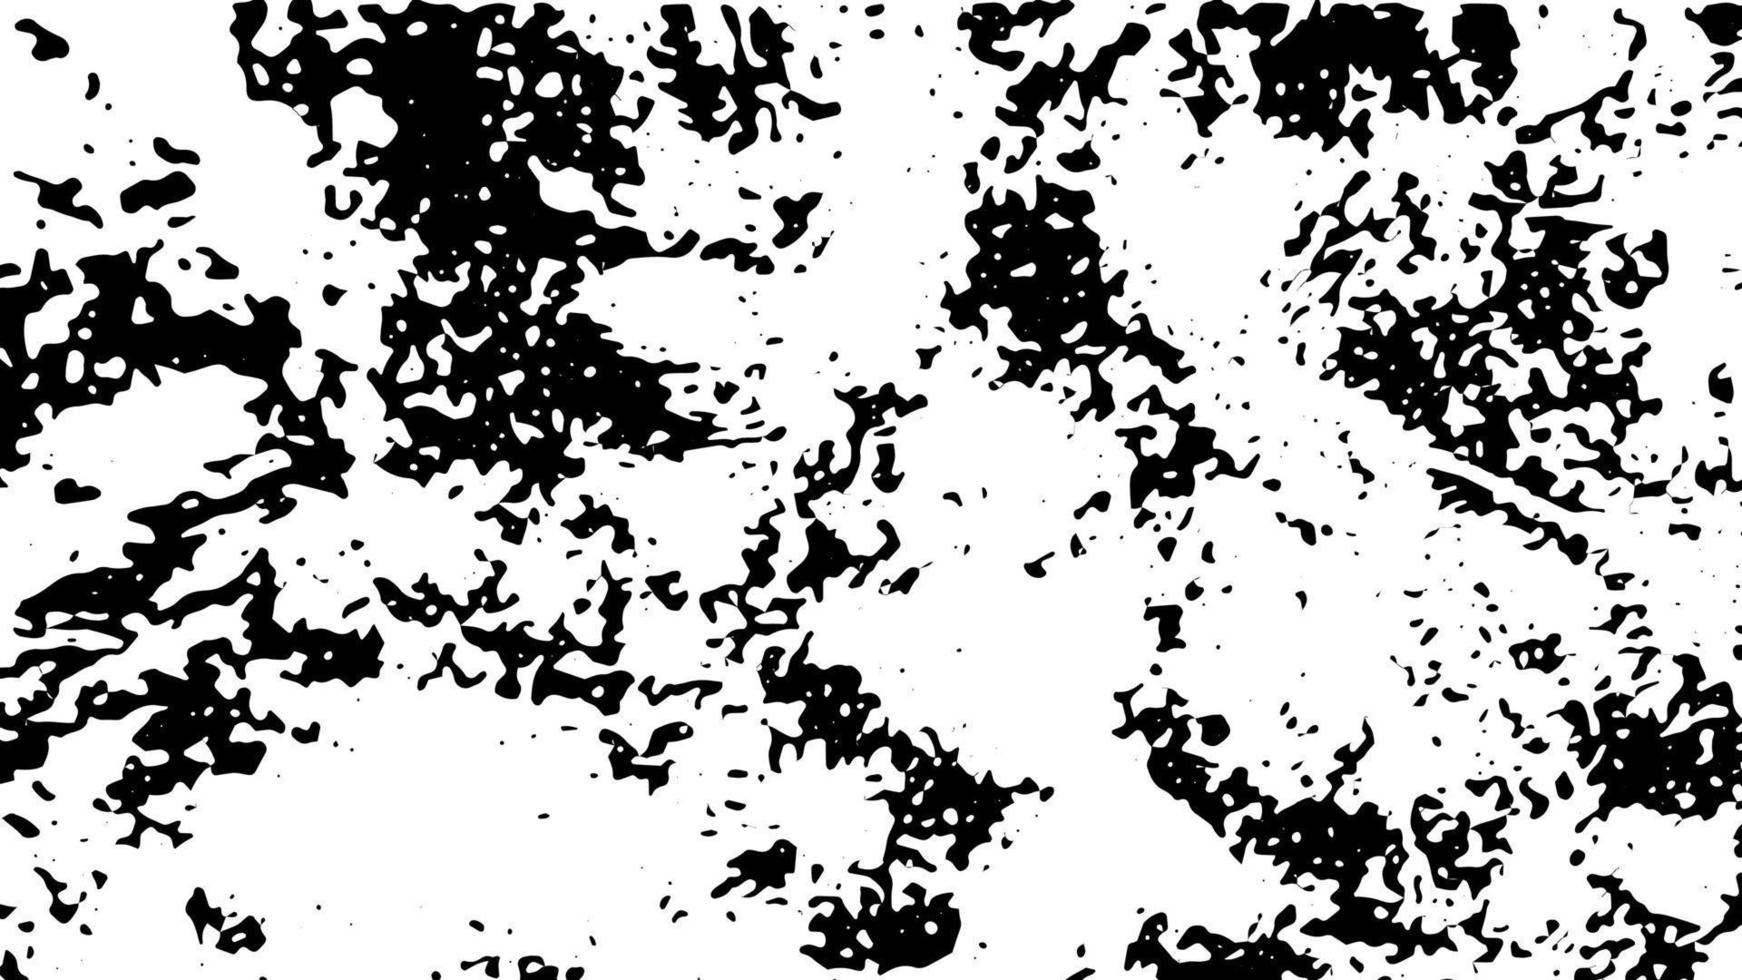 Mud background splatter, distress black ink texture, vector grunge abstract